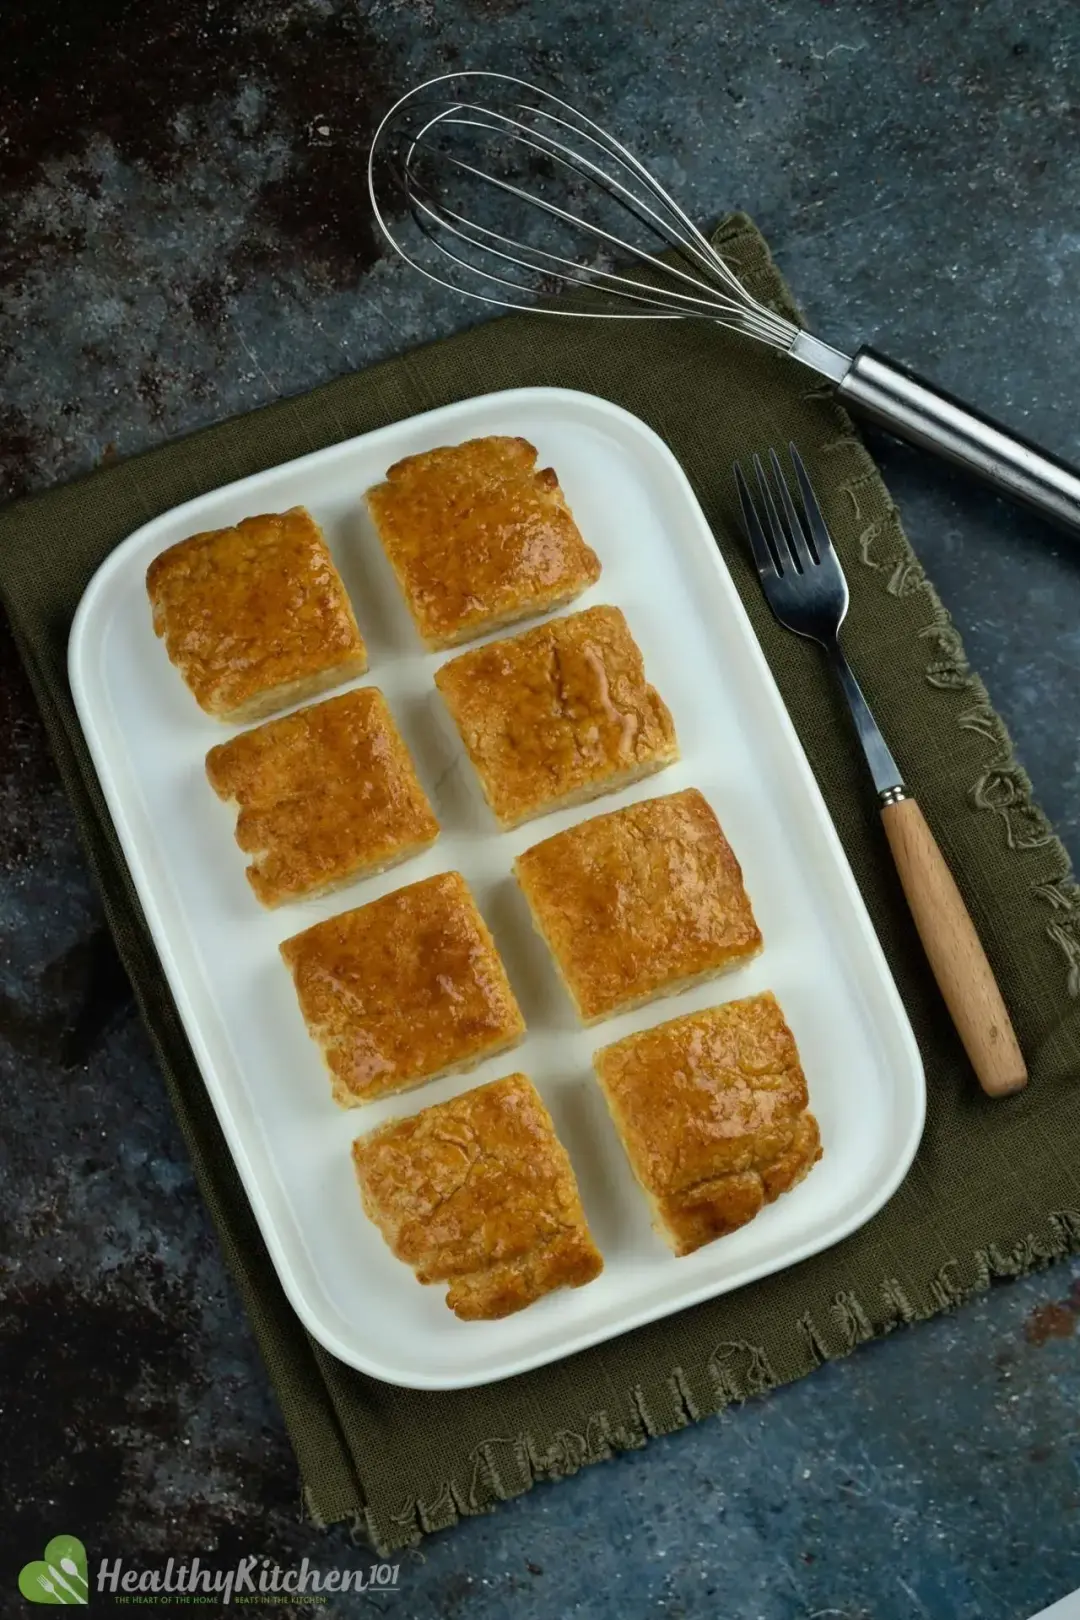 Honey Butter Biscuits Recipe